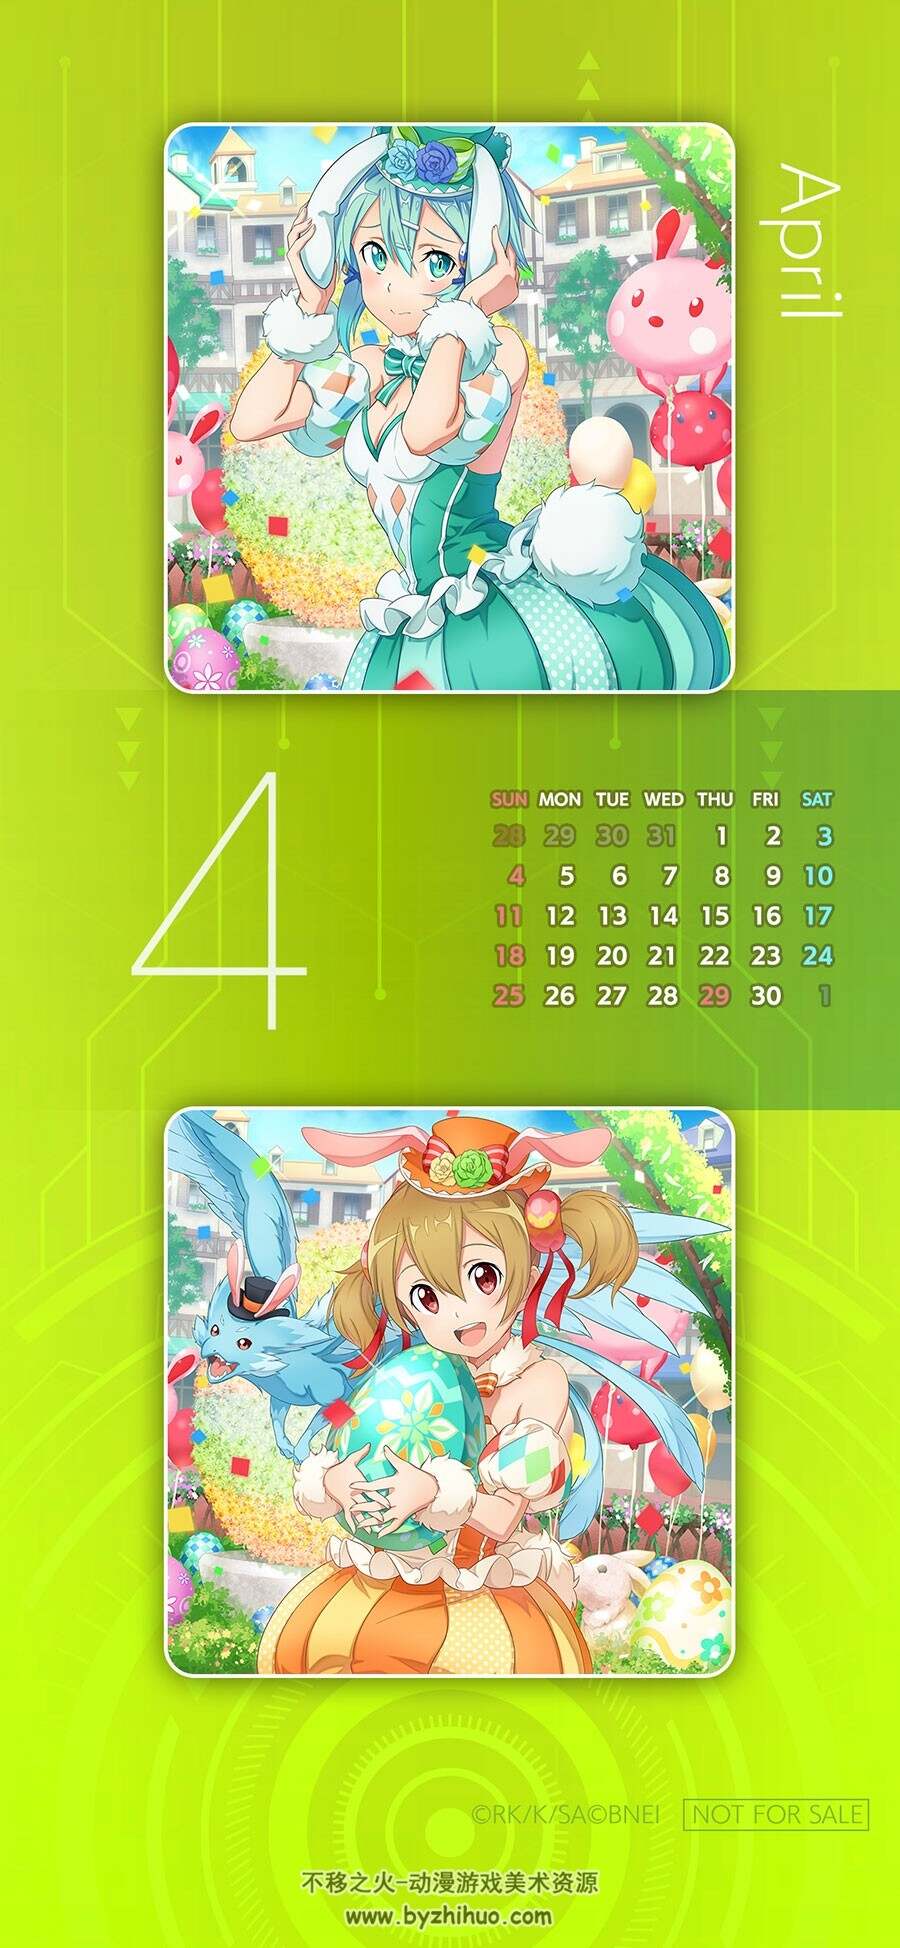 SAO 2021 Mobile Calendar Wallpapers 日历画集 百度网盘下载